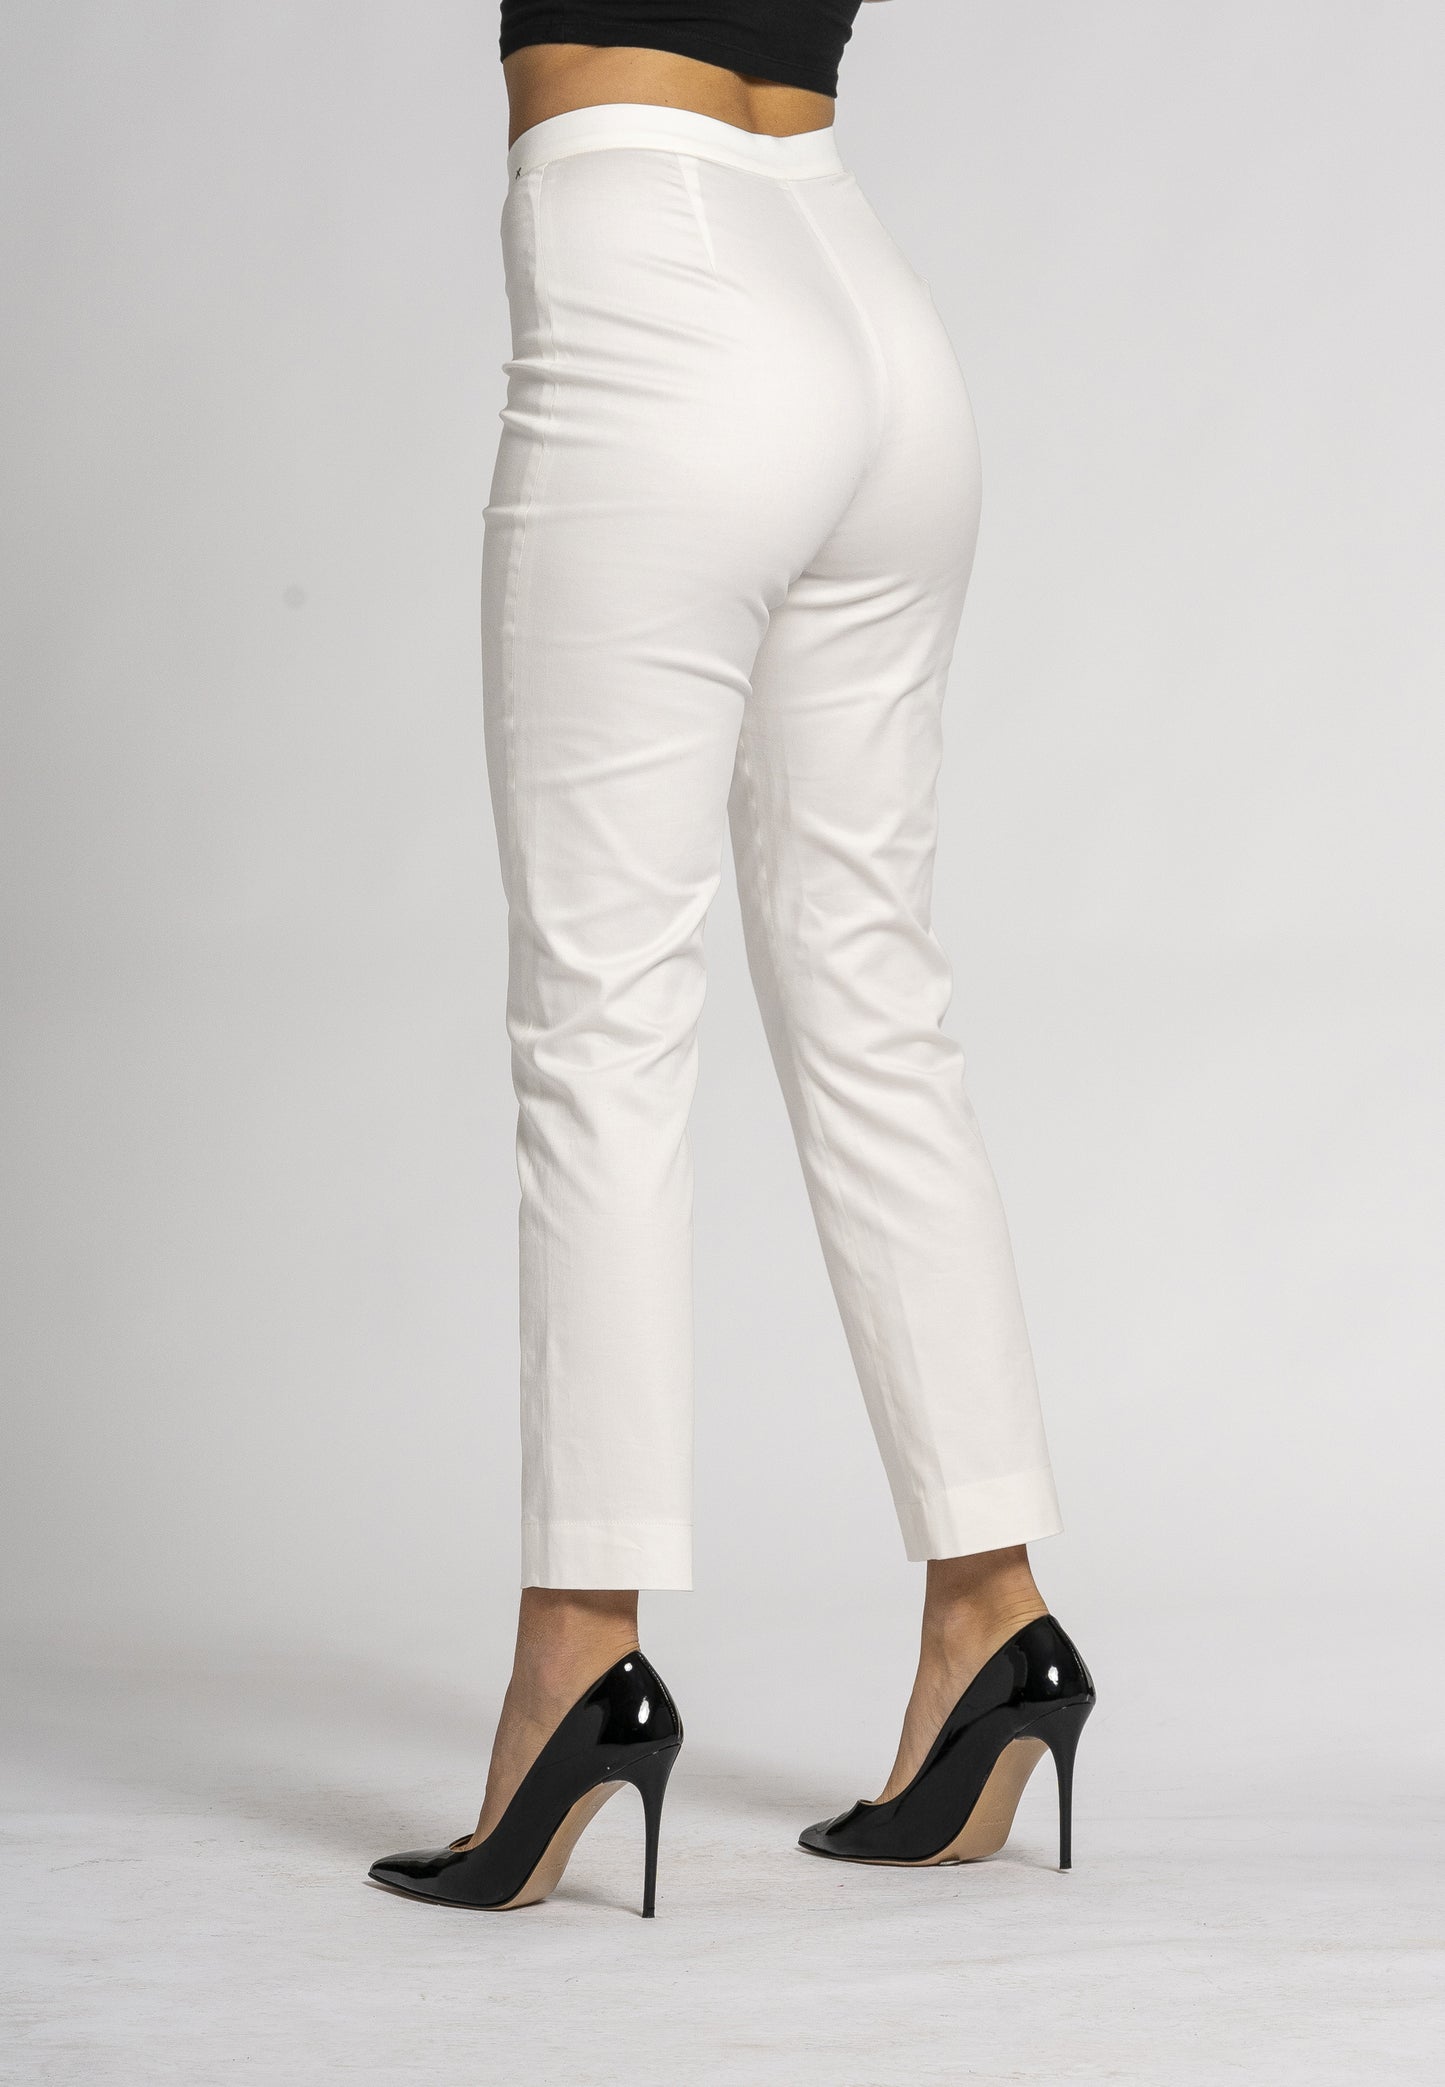 Primula Slim Fit Pants - White Stretch Cotton, Ankle-Length Leg, Zip a ...